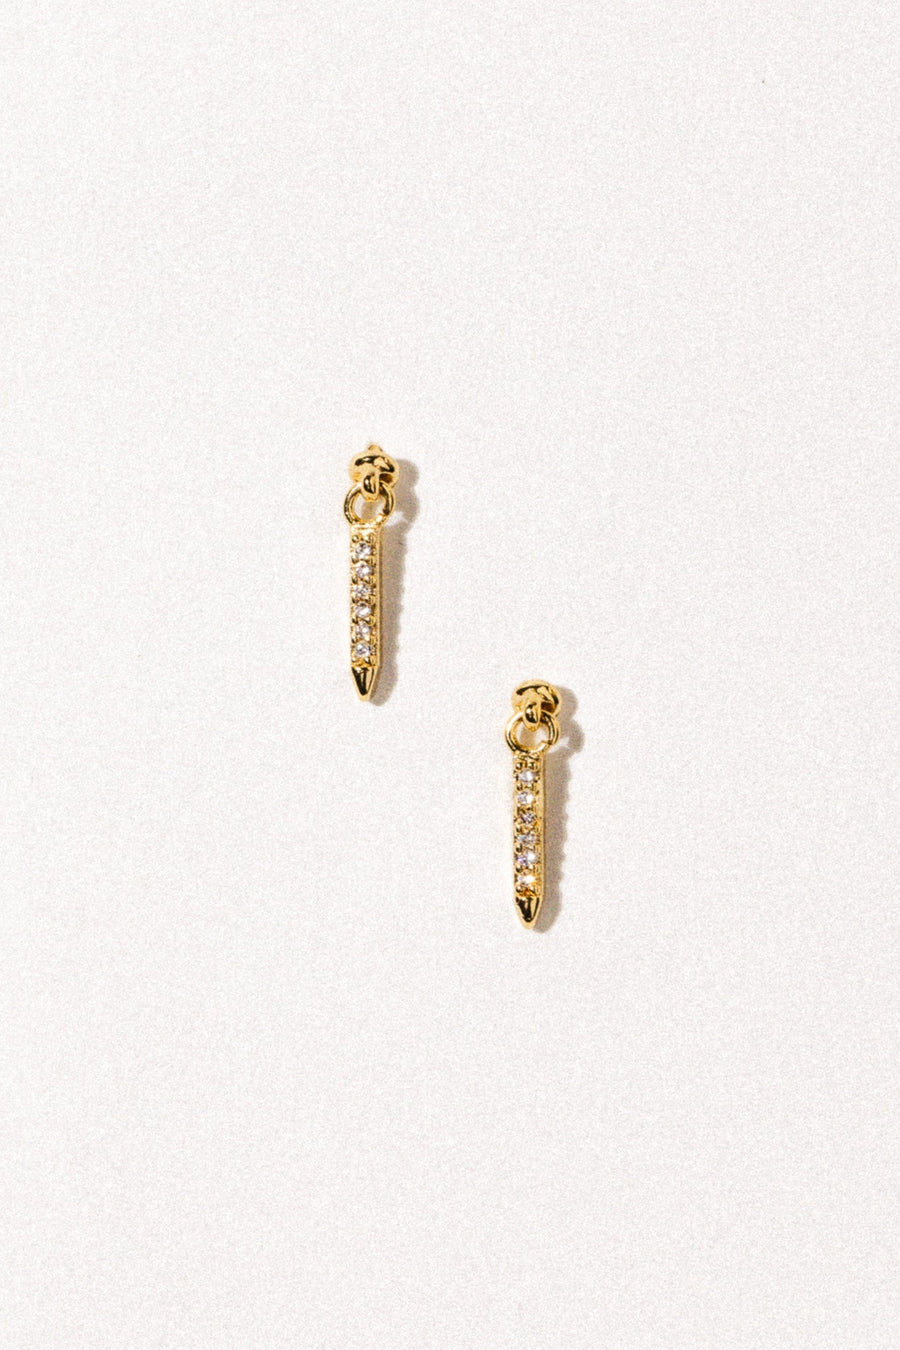 Dona Italia Jewelry Gold / Short Falling Star Stud Earrings